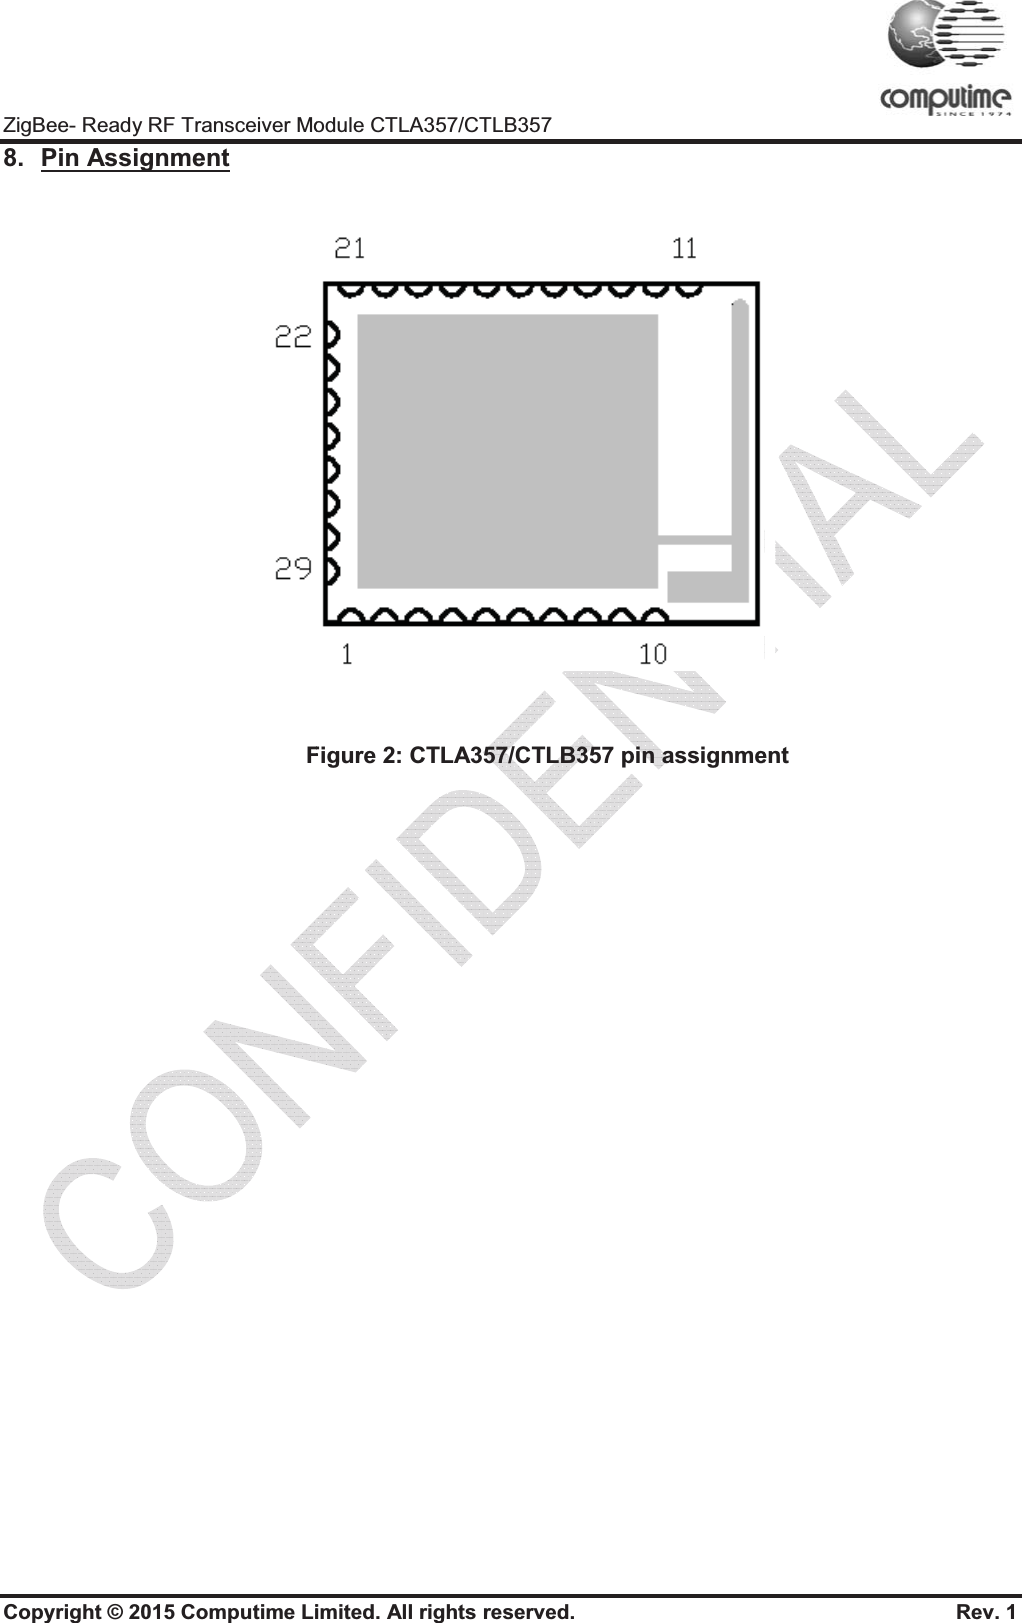 ZigBee- Ready RF Transceiver MoCopyright © 2015 Computime Li8. Pin AssignmentFodule CTLA357/CTLB357 imited. All rights reserved.                     Figure 2: CTLA357/CTLB357 pin assignme                                 Rev. 1 ent